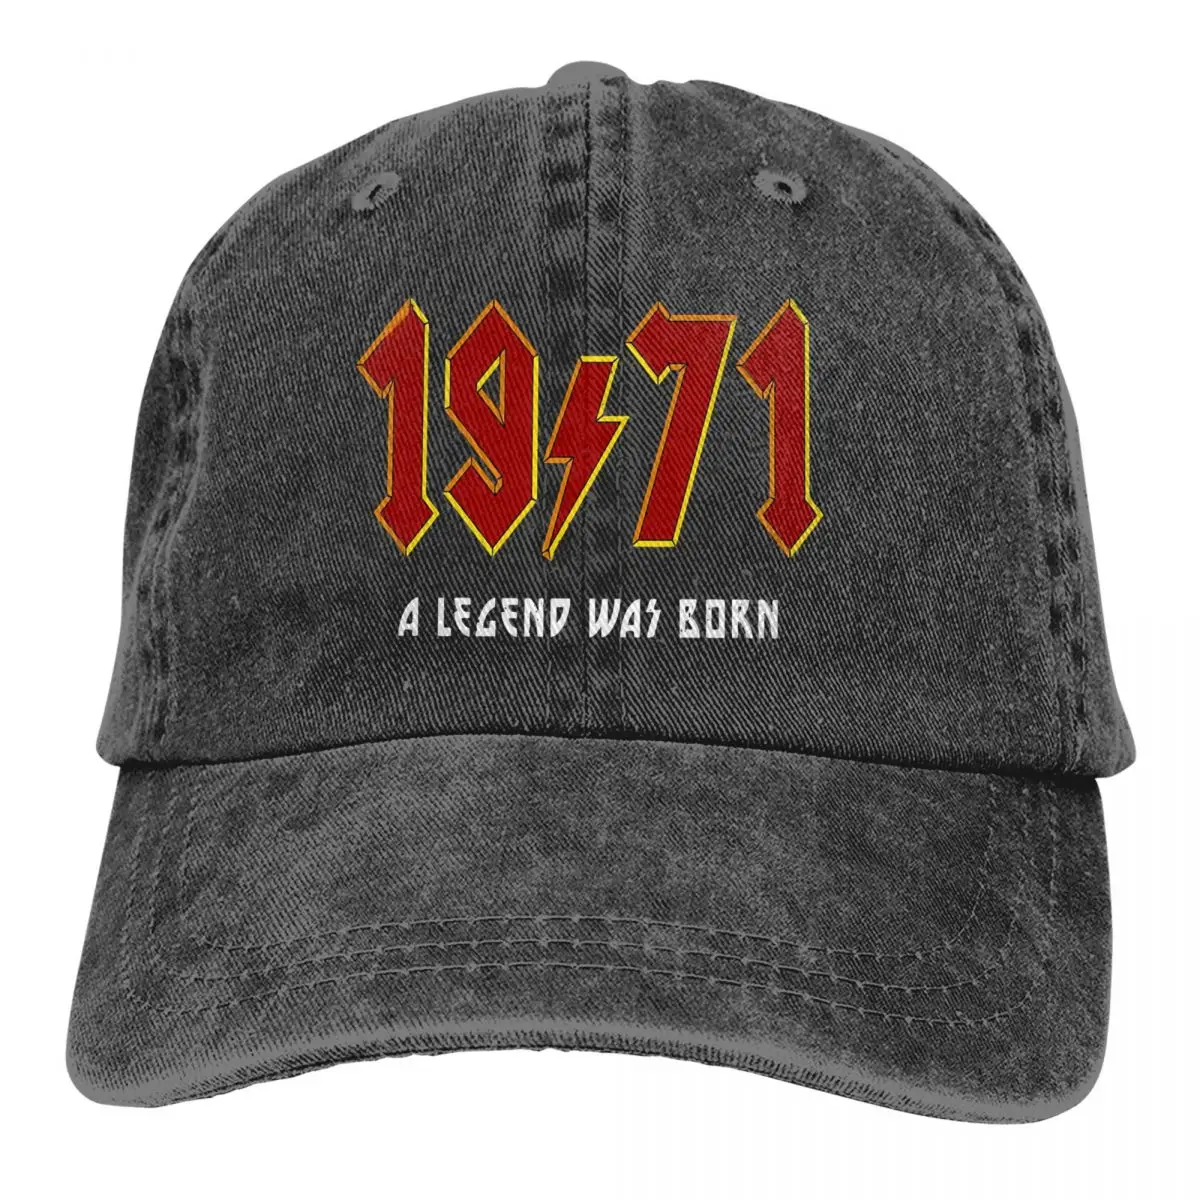 

1971 Art Culture Multicolor Hat Peaked Women's Cap A Legend Was Born Personalized Visor Protection Hats